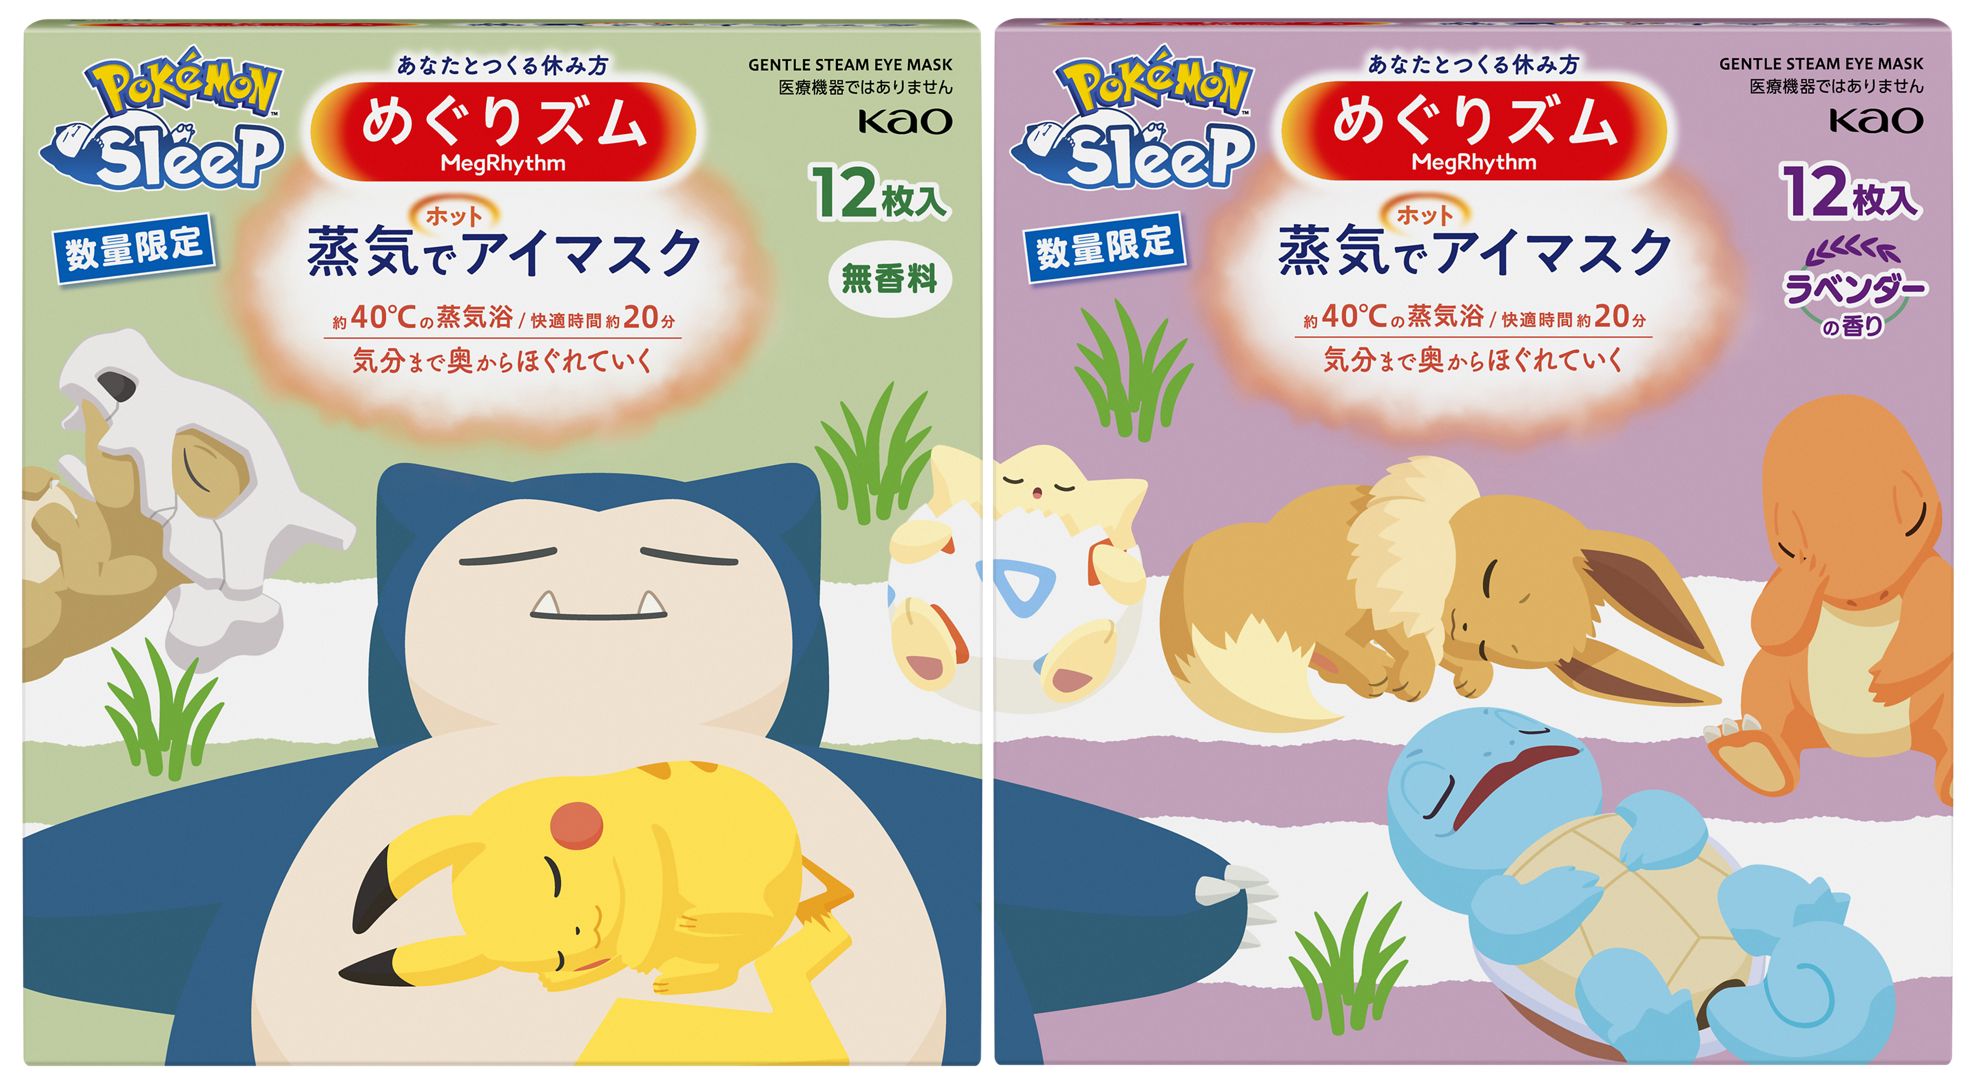 Pokemon Sleep」デザインの「めぐりズム 蒸気でホットアイマスク」が9